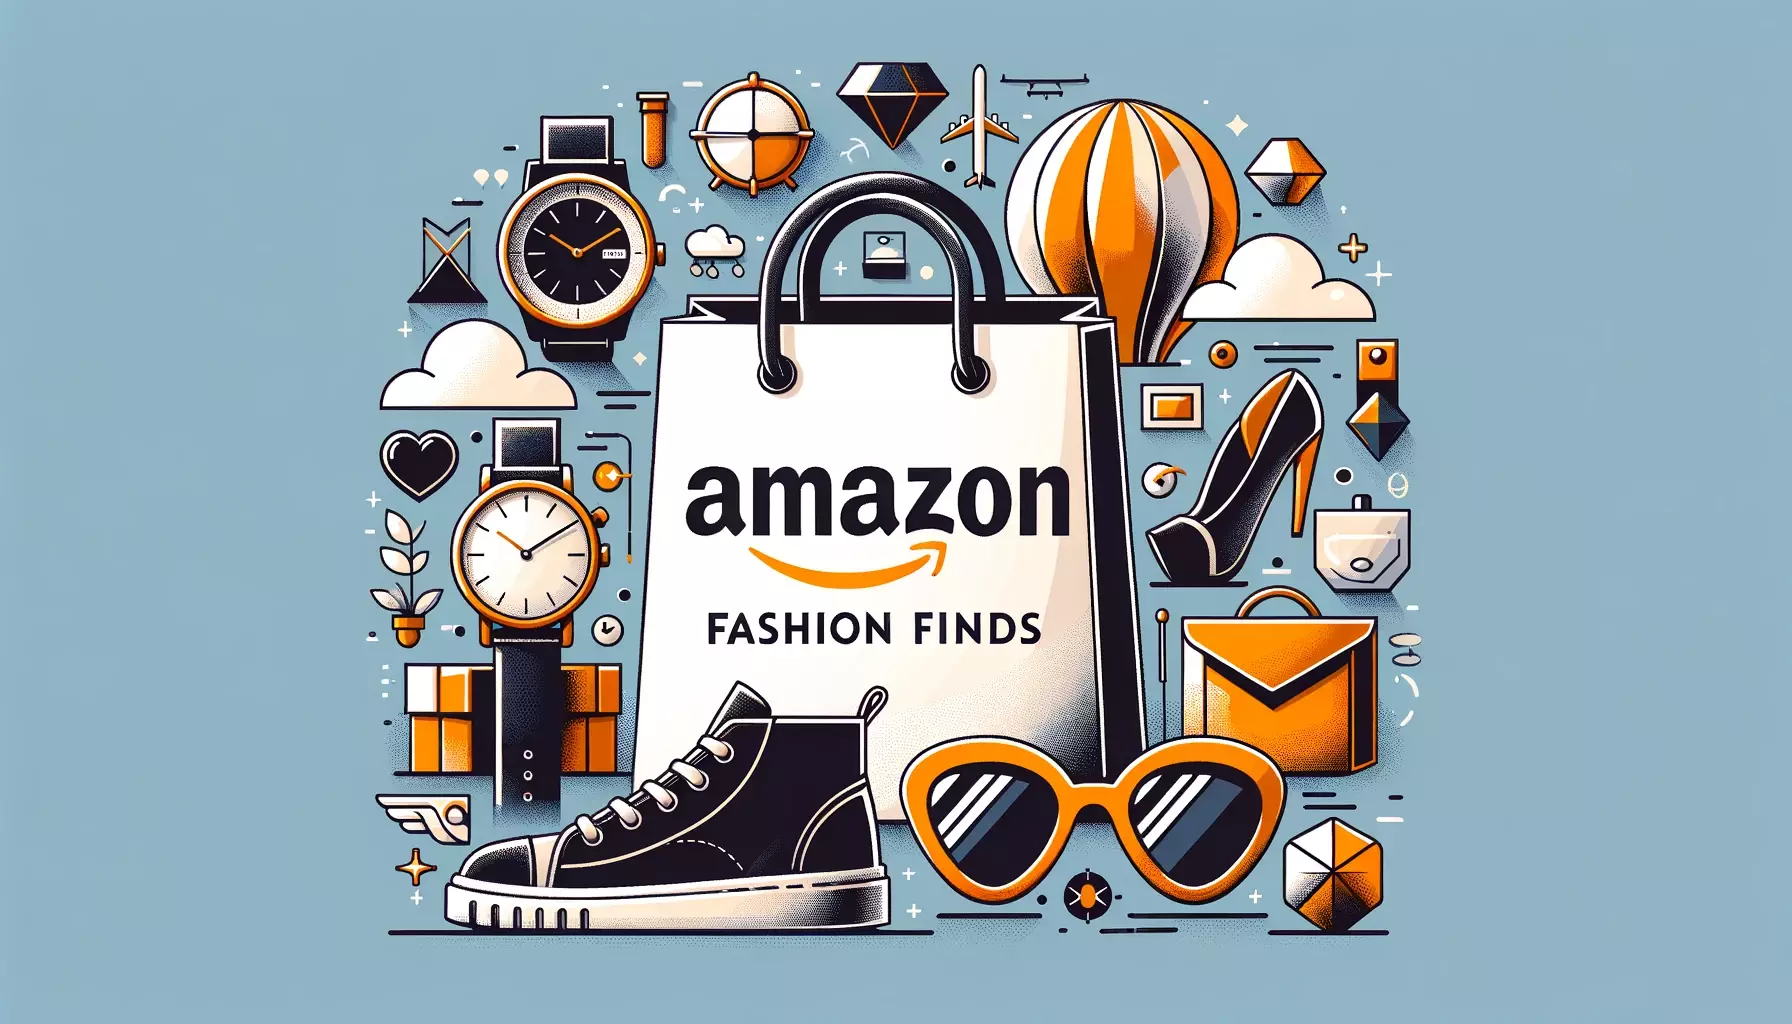 Amazon fashion finds